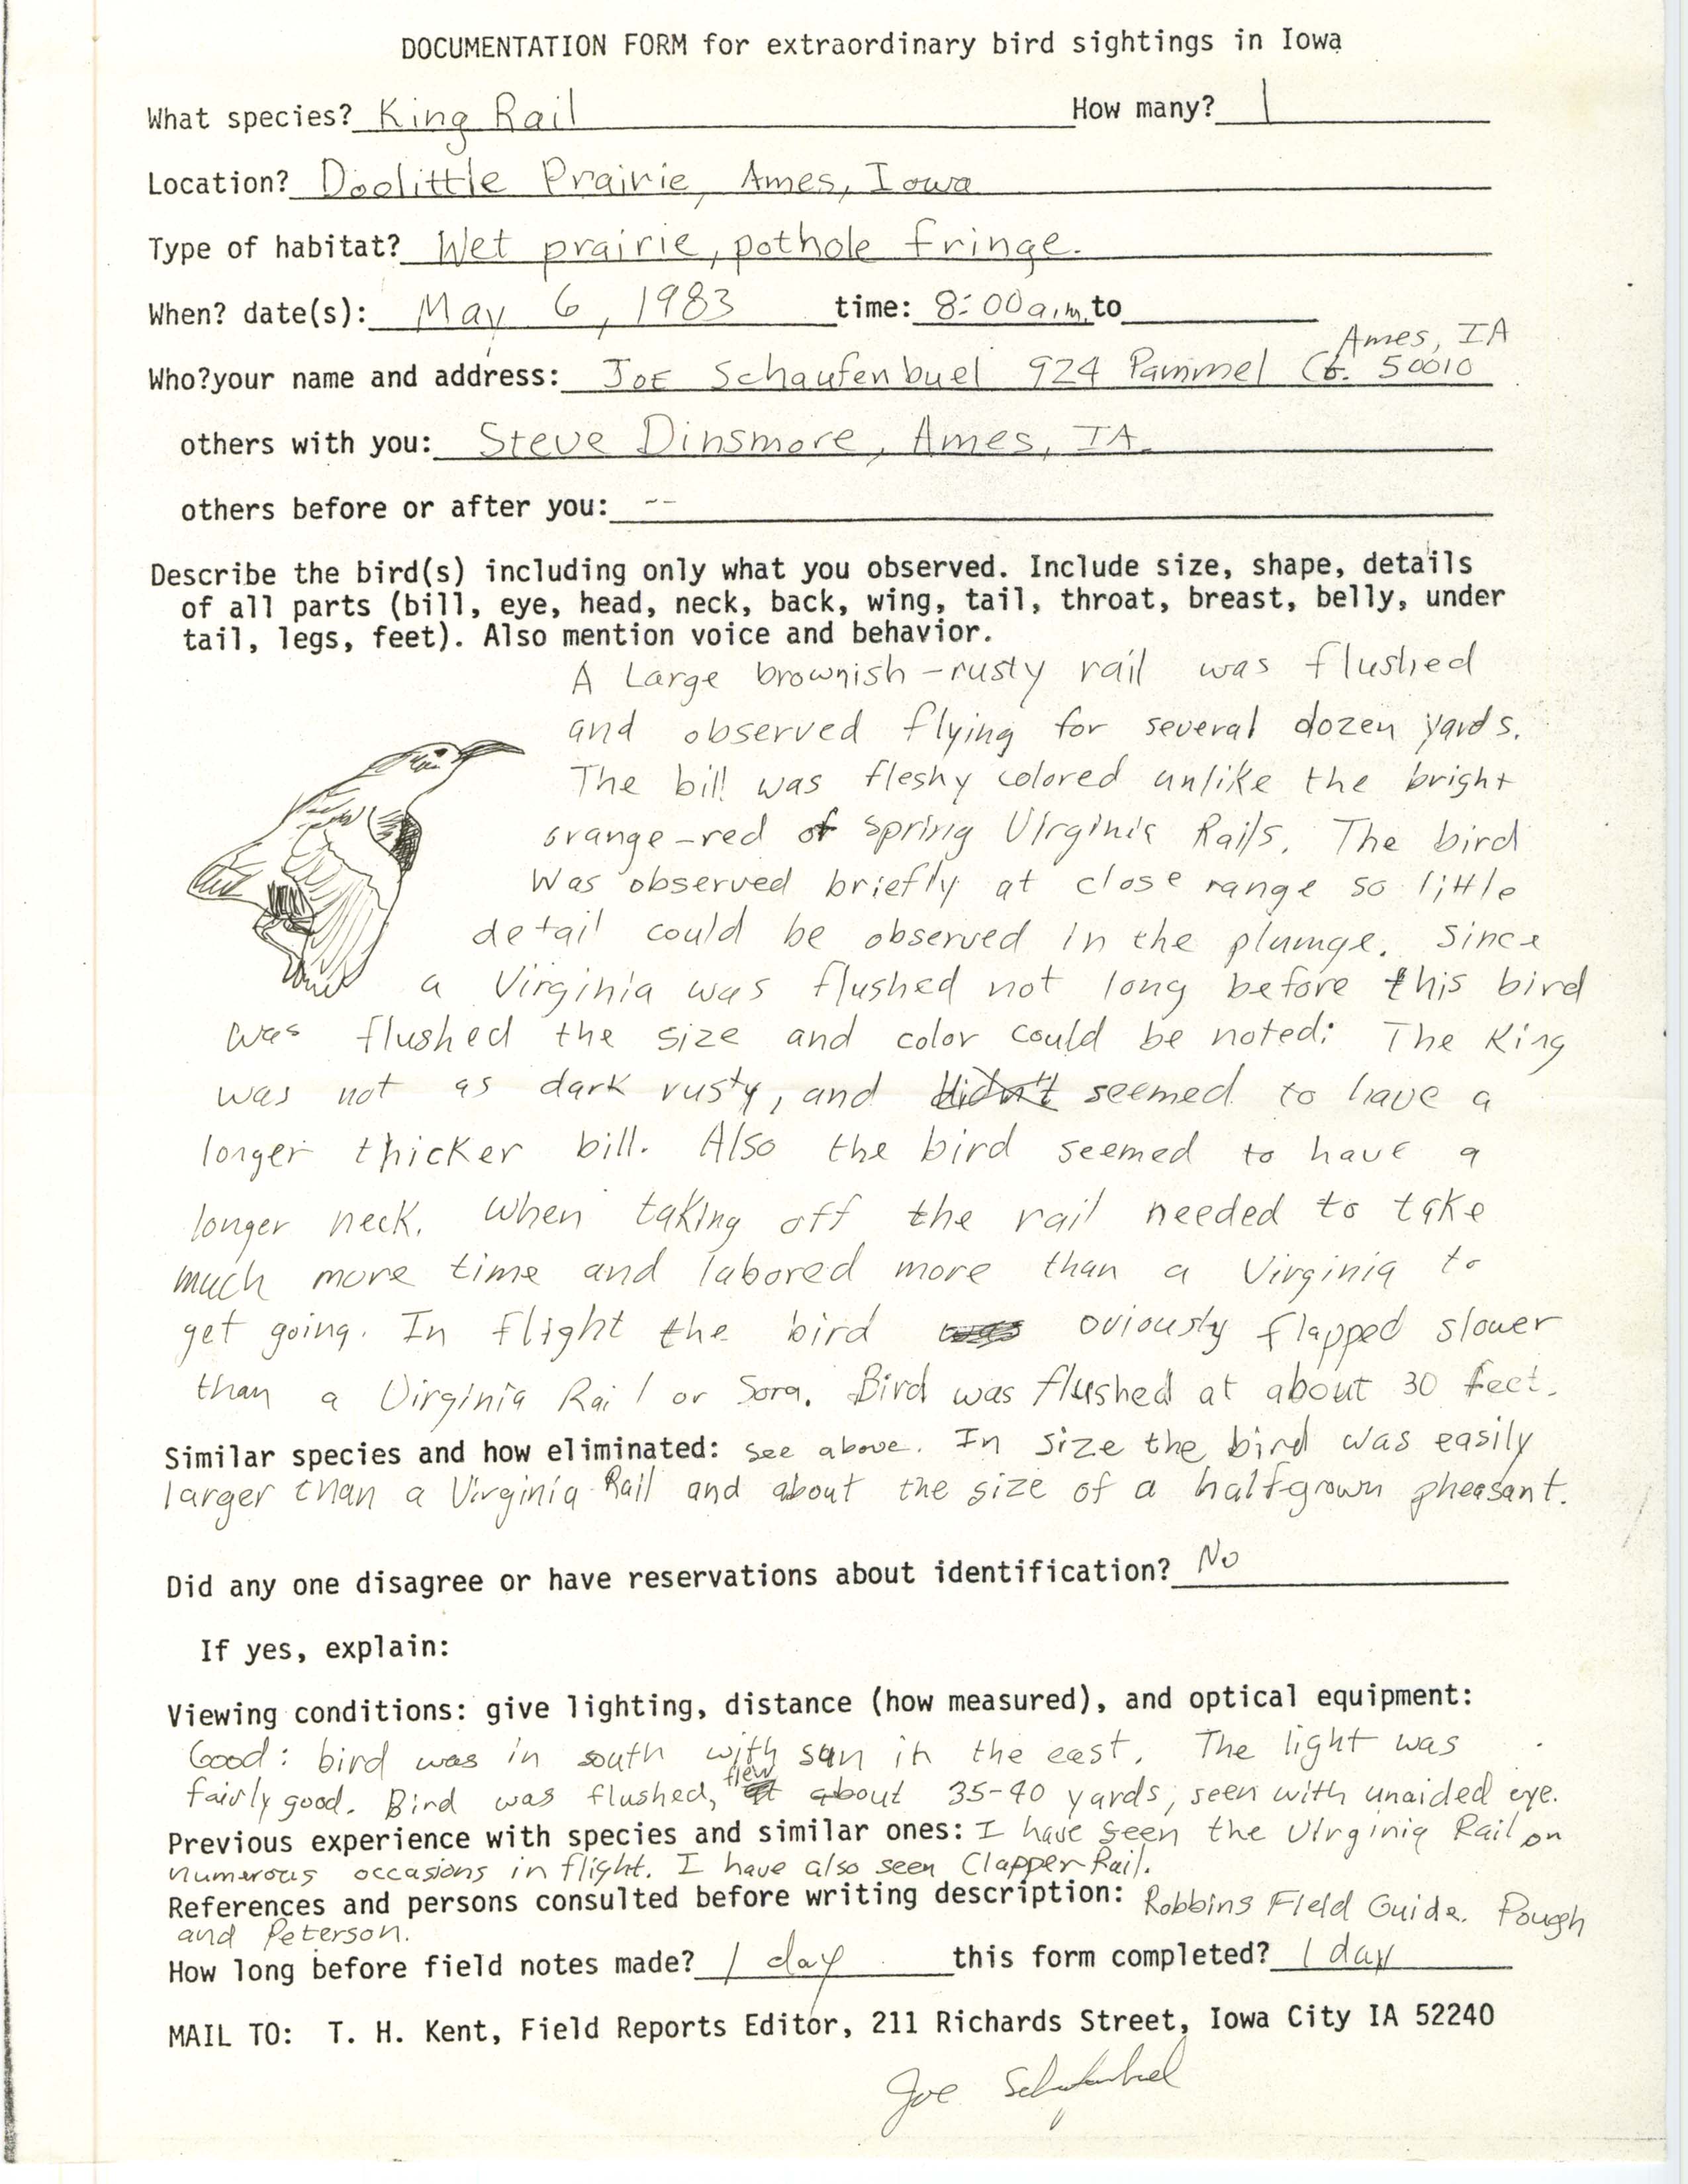 Rare bird documentation form for King Rail at Doolittle Prairie, 1983